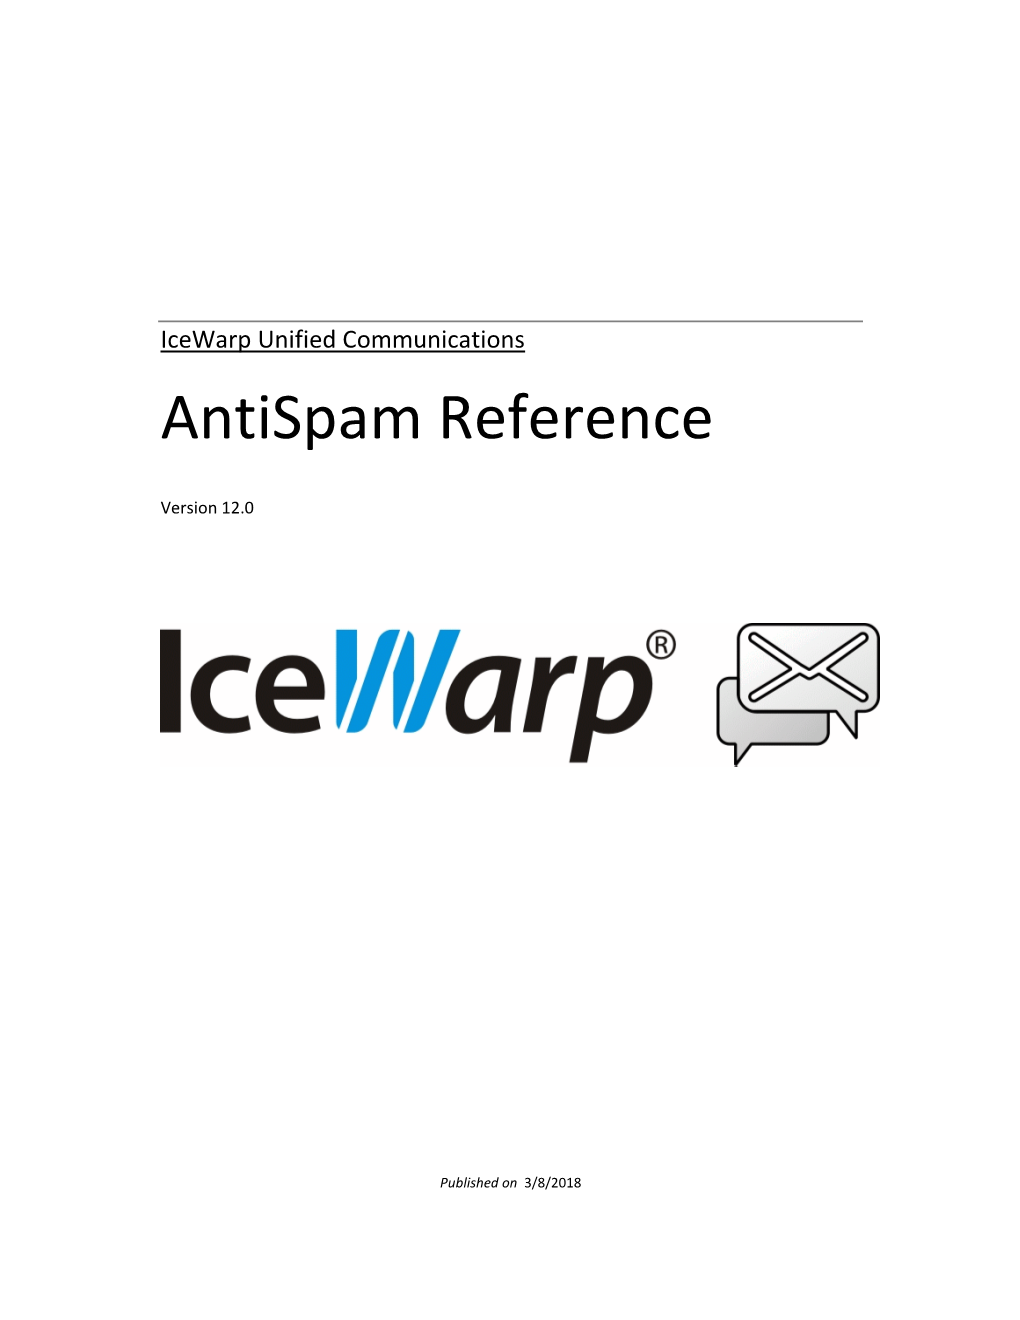 Antispam Reference